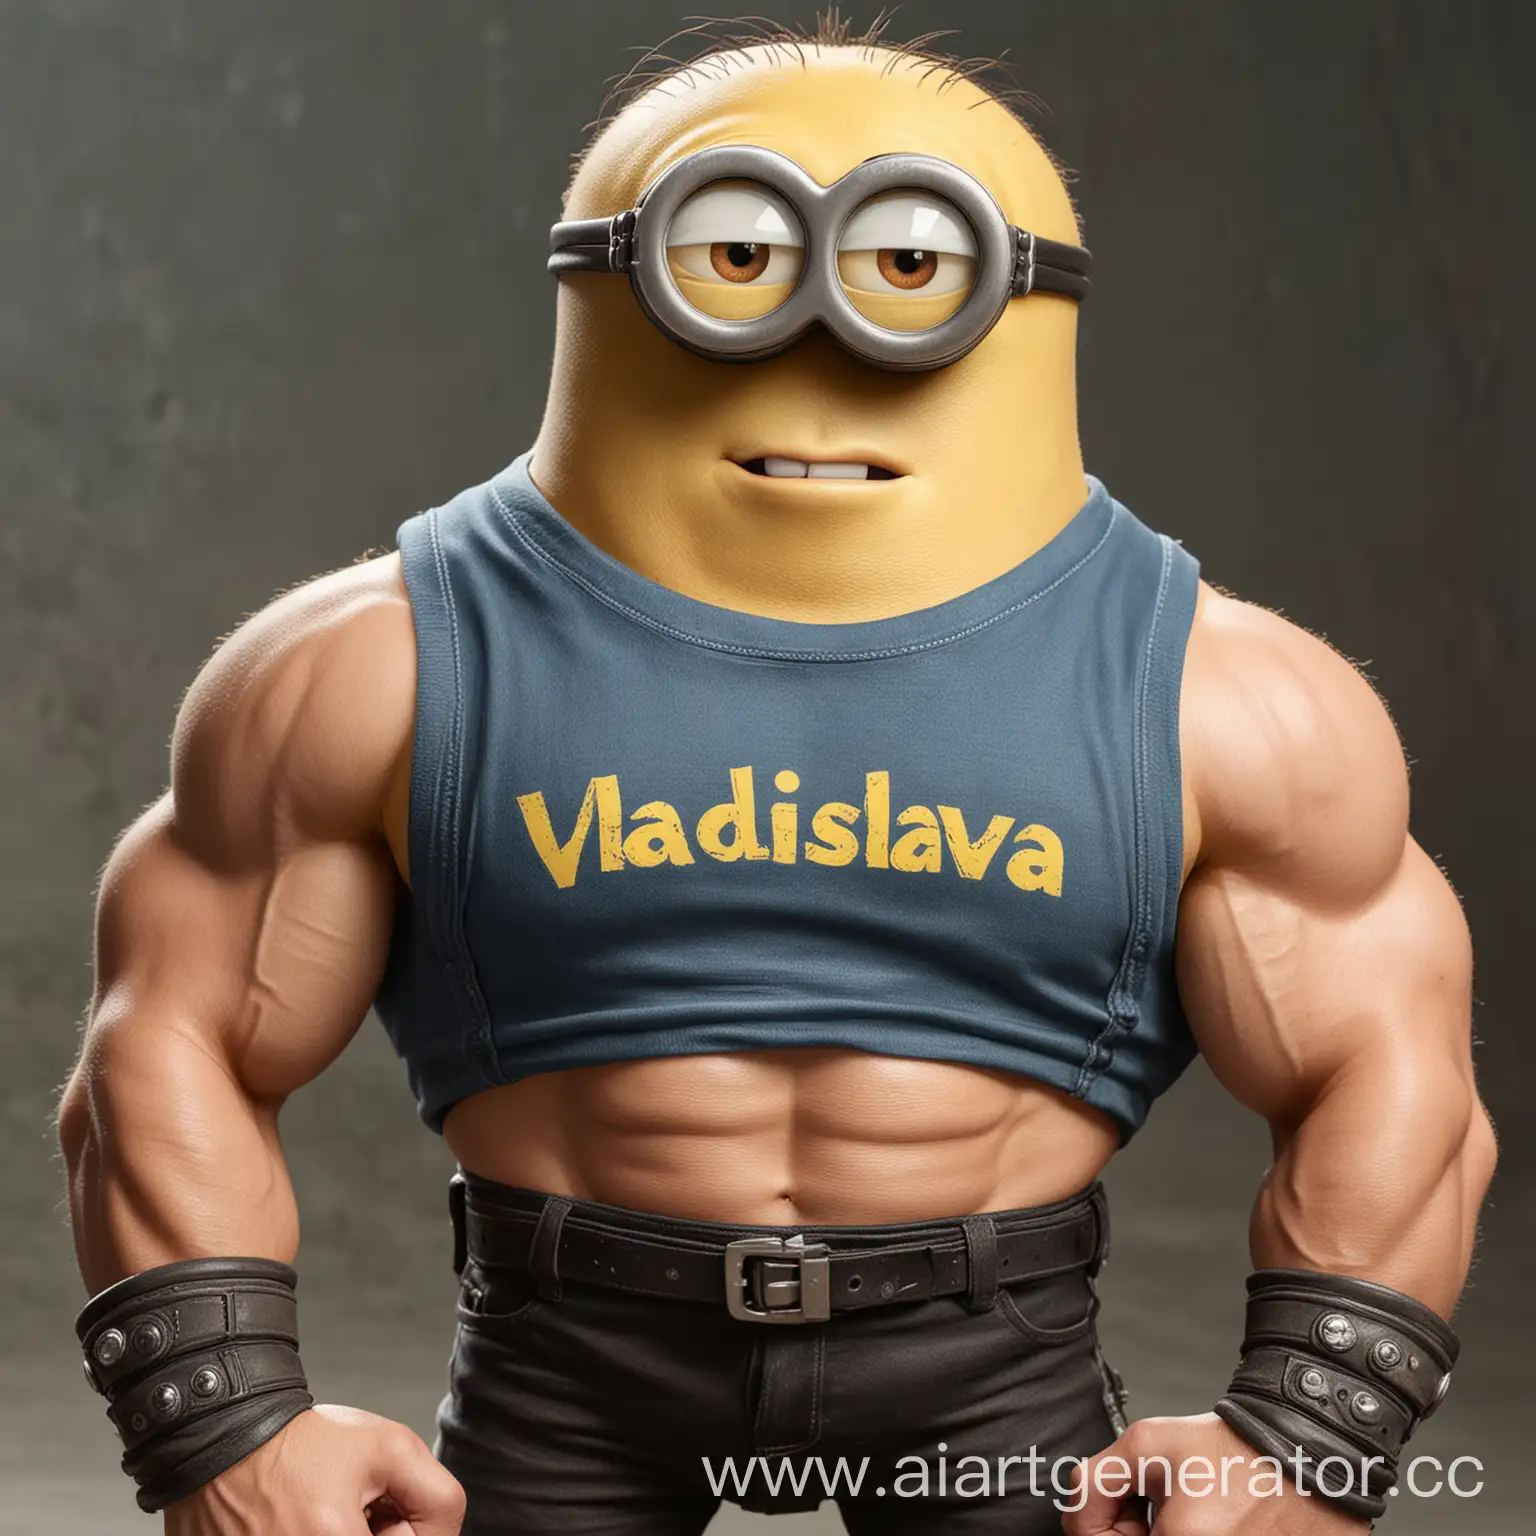 MuscleBound-Minion-Vladislava-A-Powerful-Figure-in-a-Vibrant-World